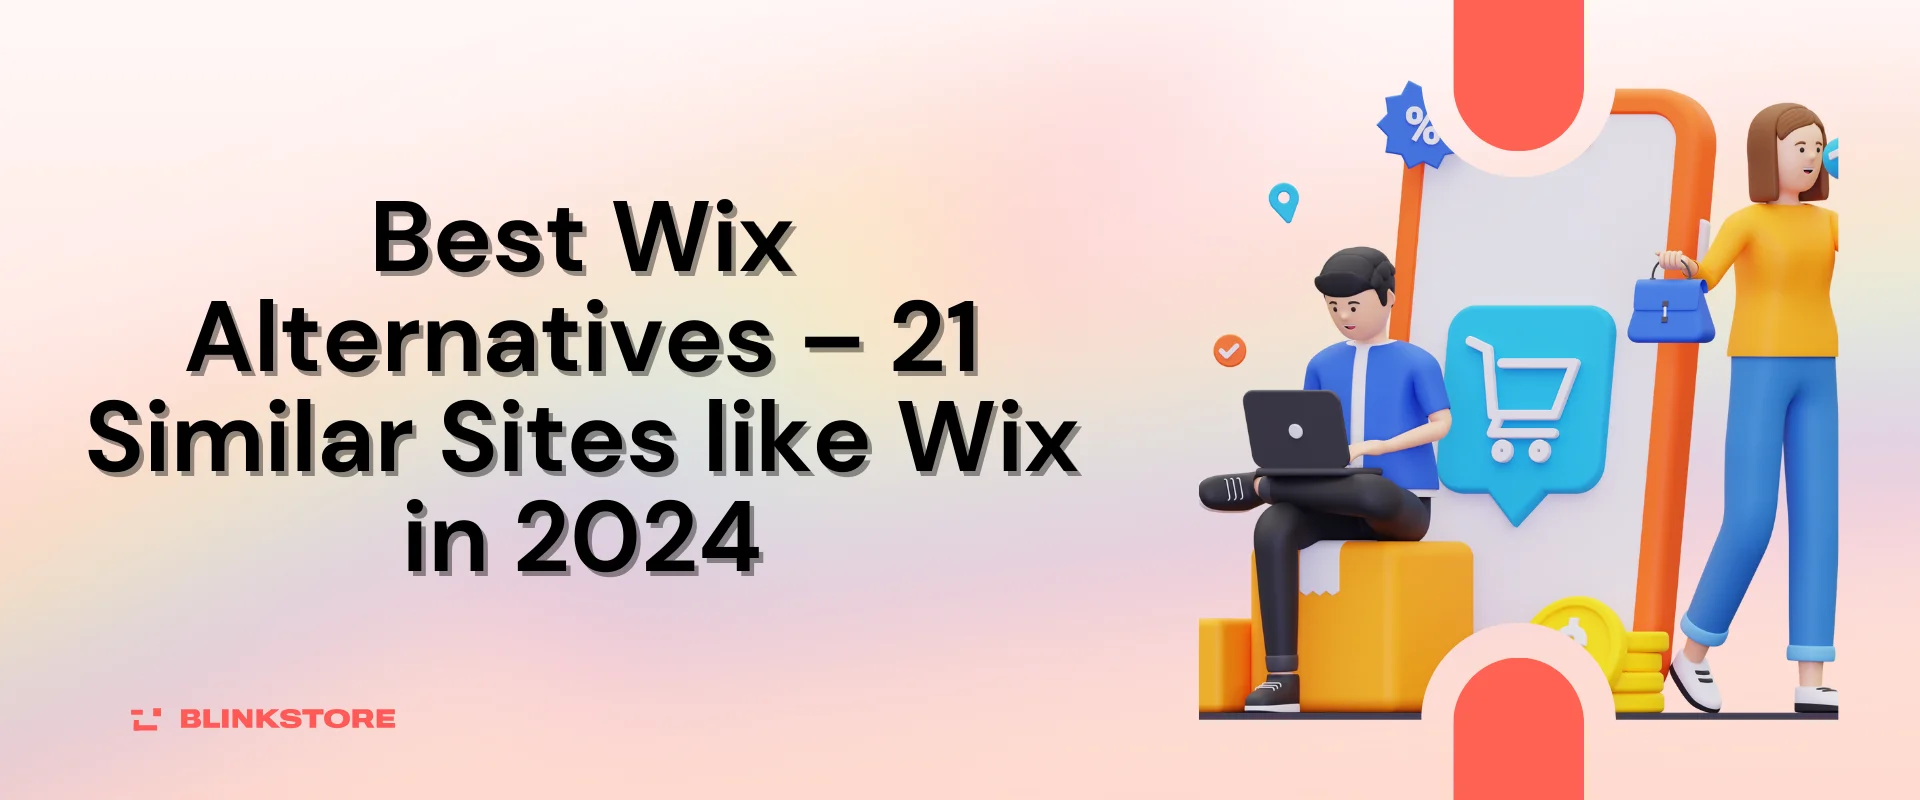 Wix Alternatives